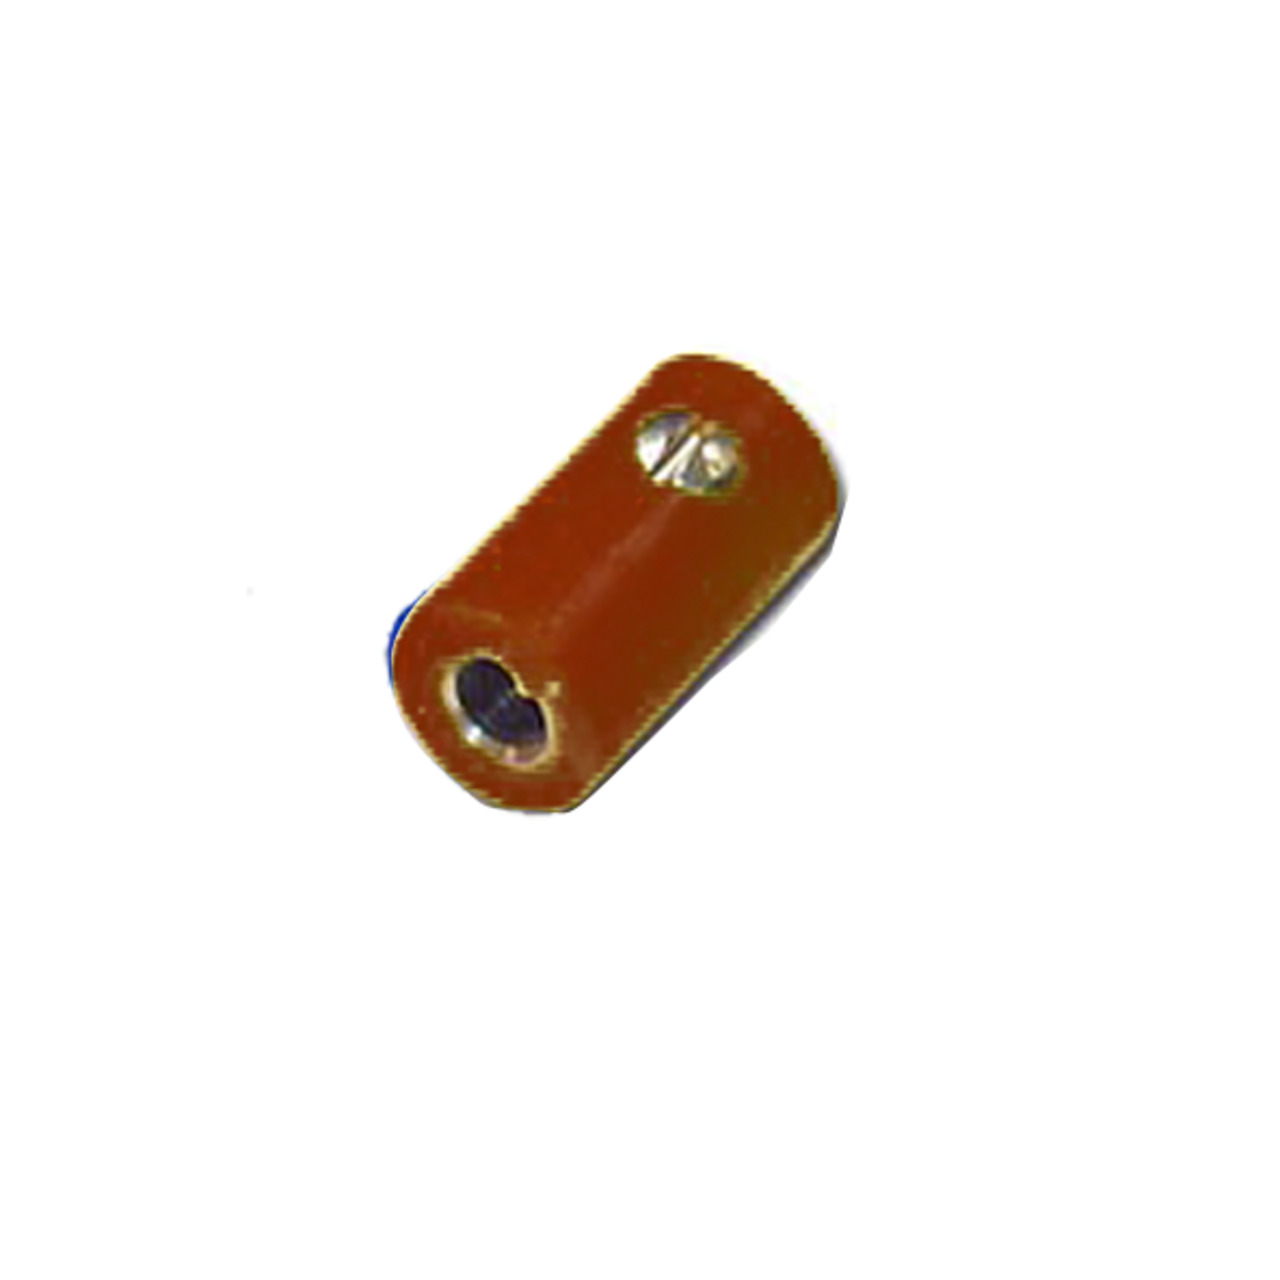 HO-Kupplung 2-6 mm- braun unter Komponenten